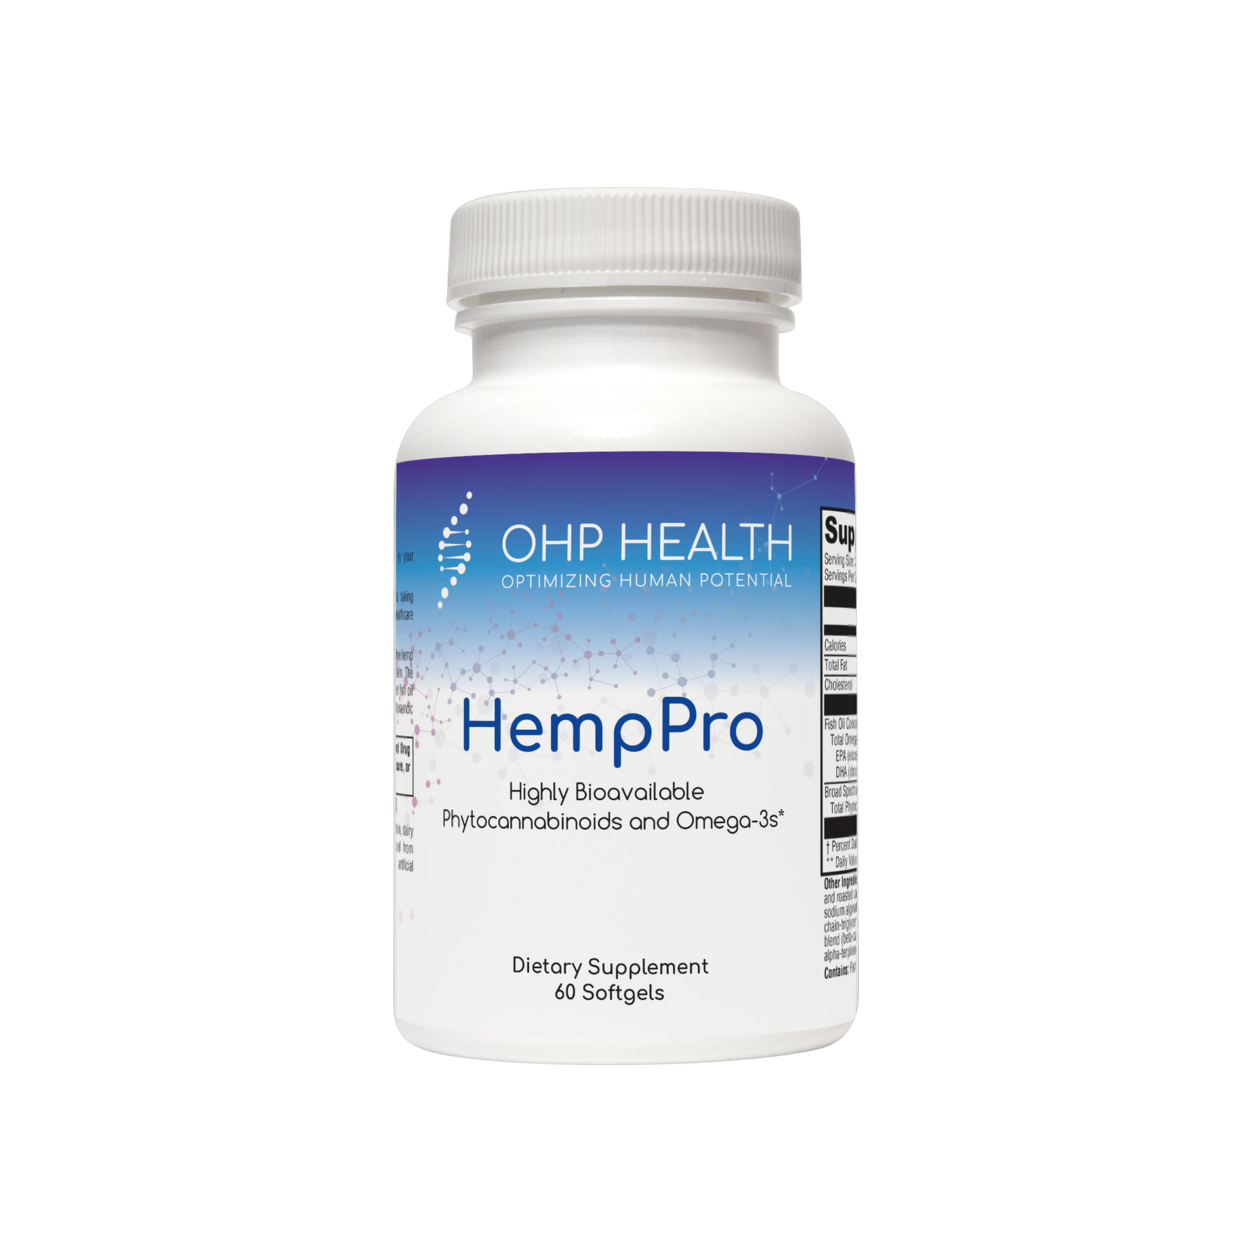 HempPro | 60 Caps by OHP Health.